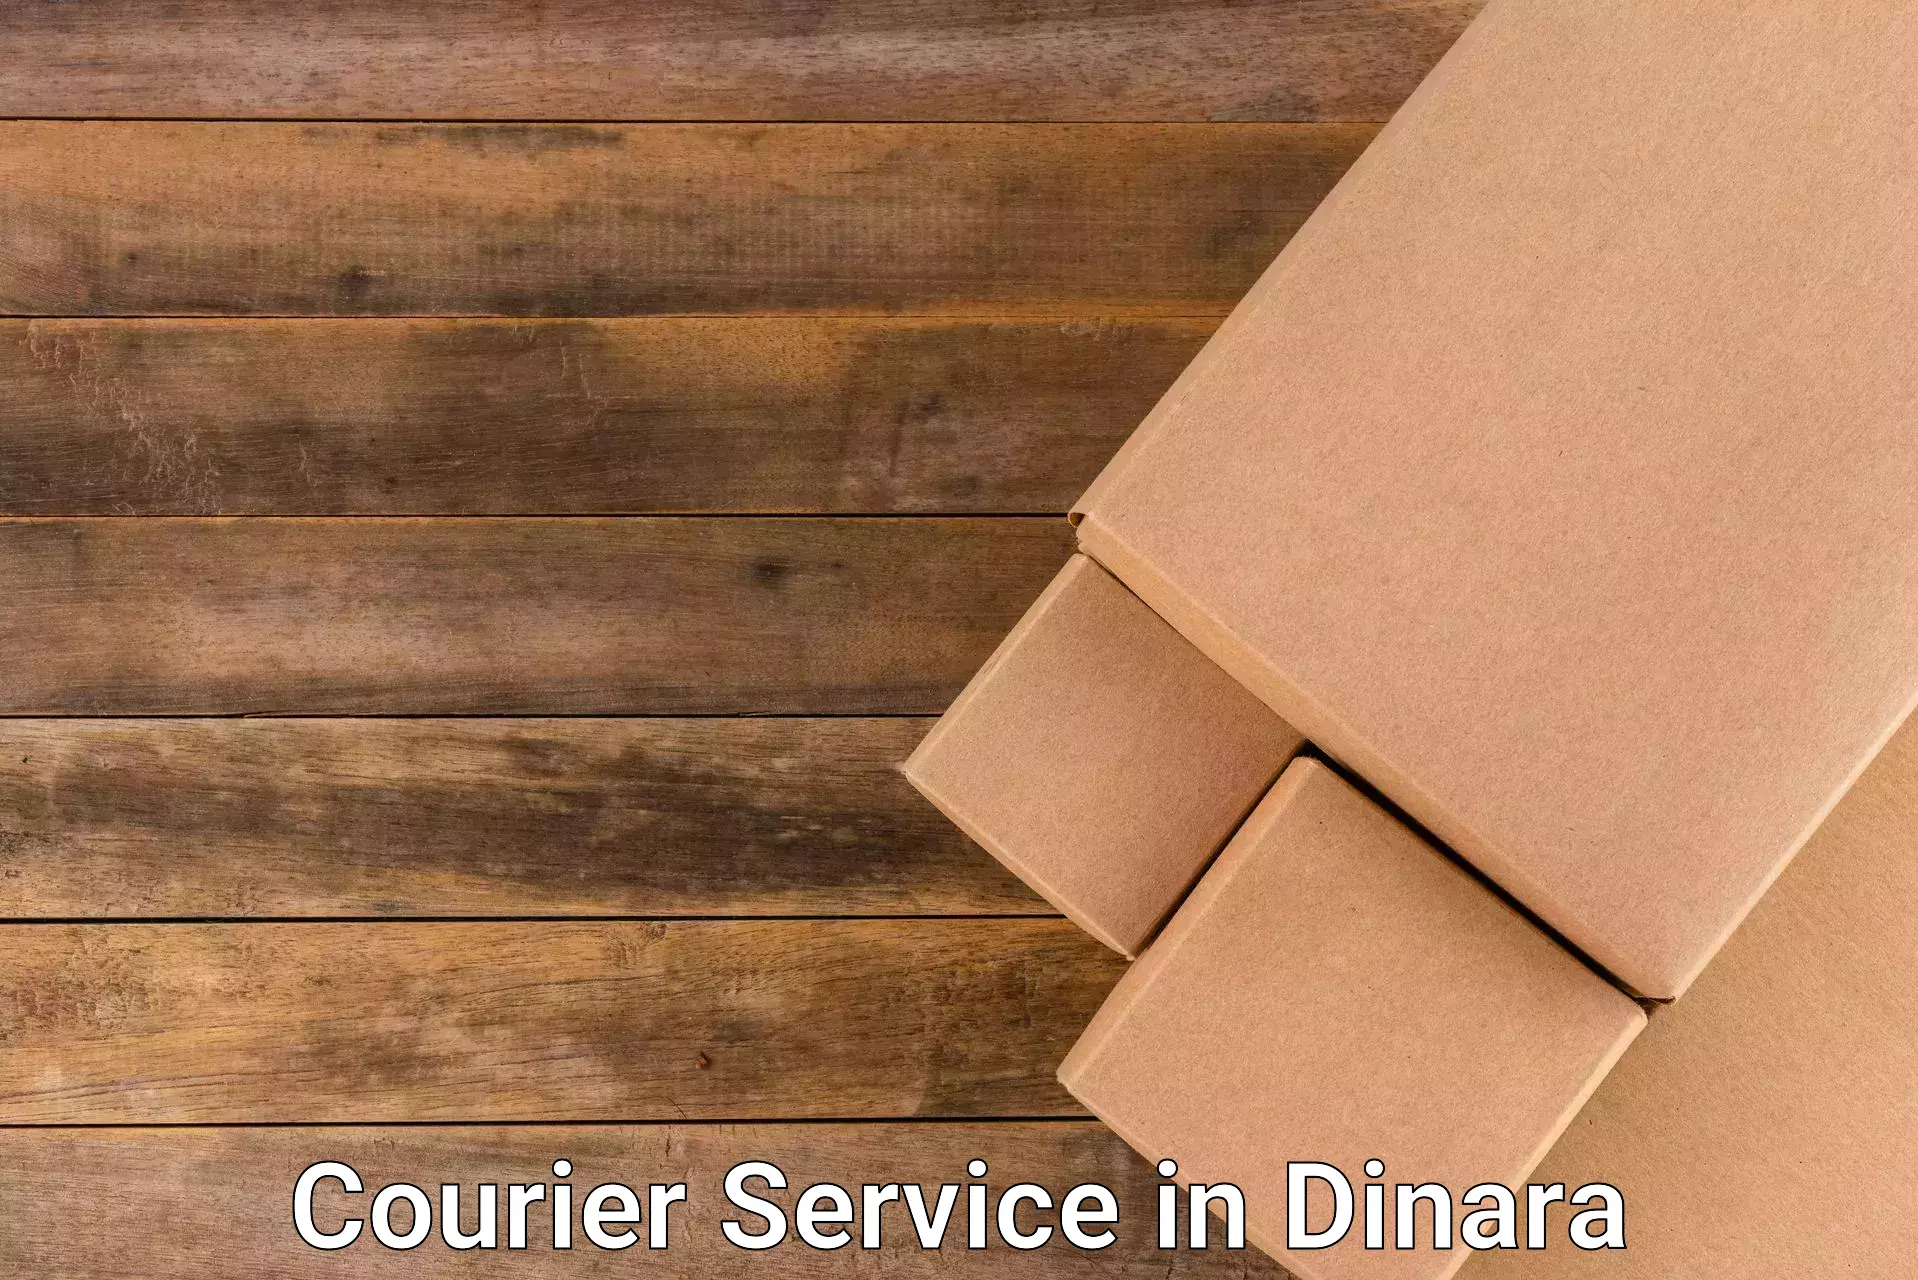 High-speed parcel service in Dinara